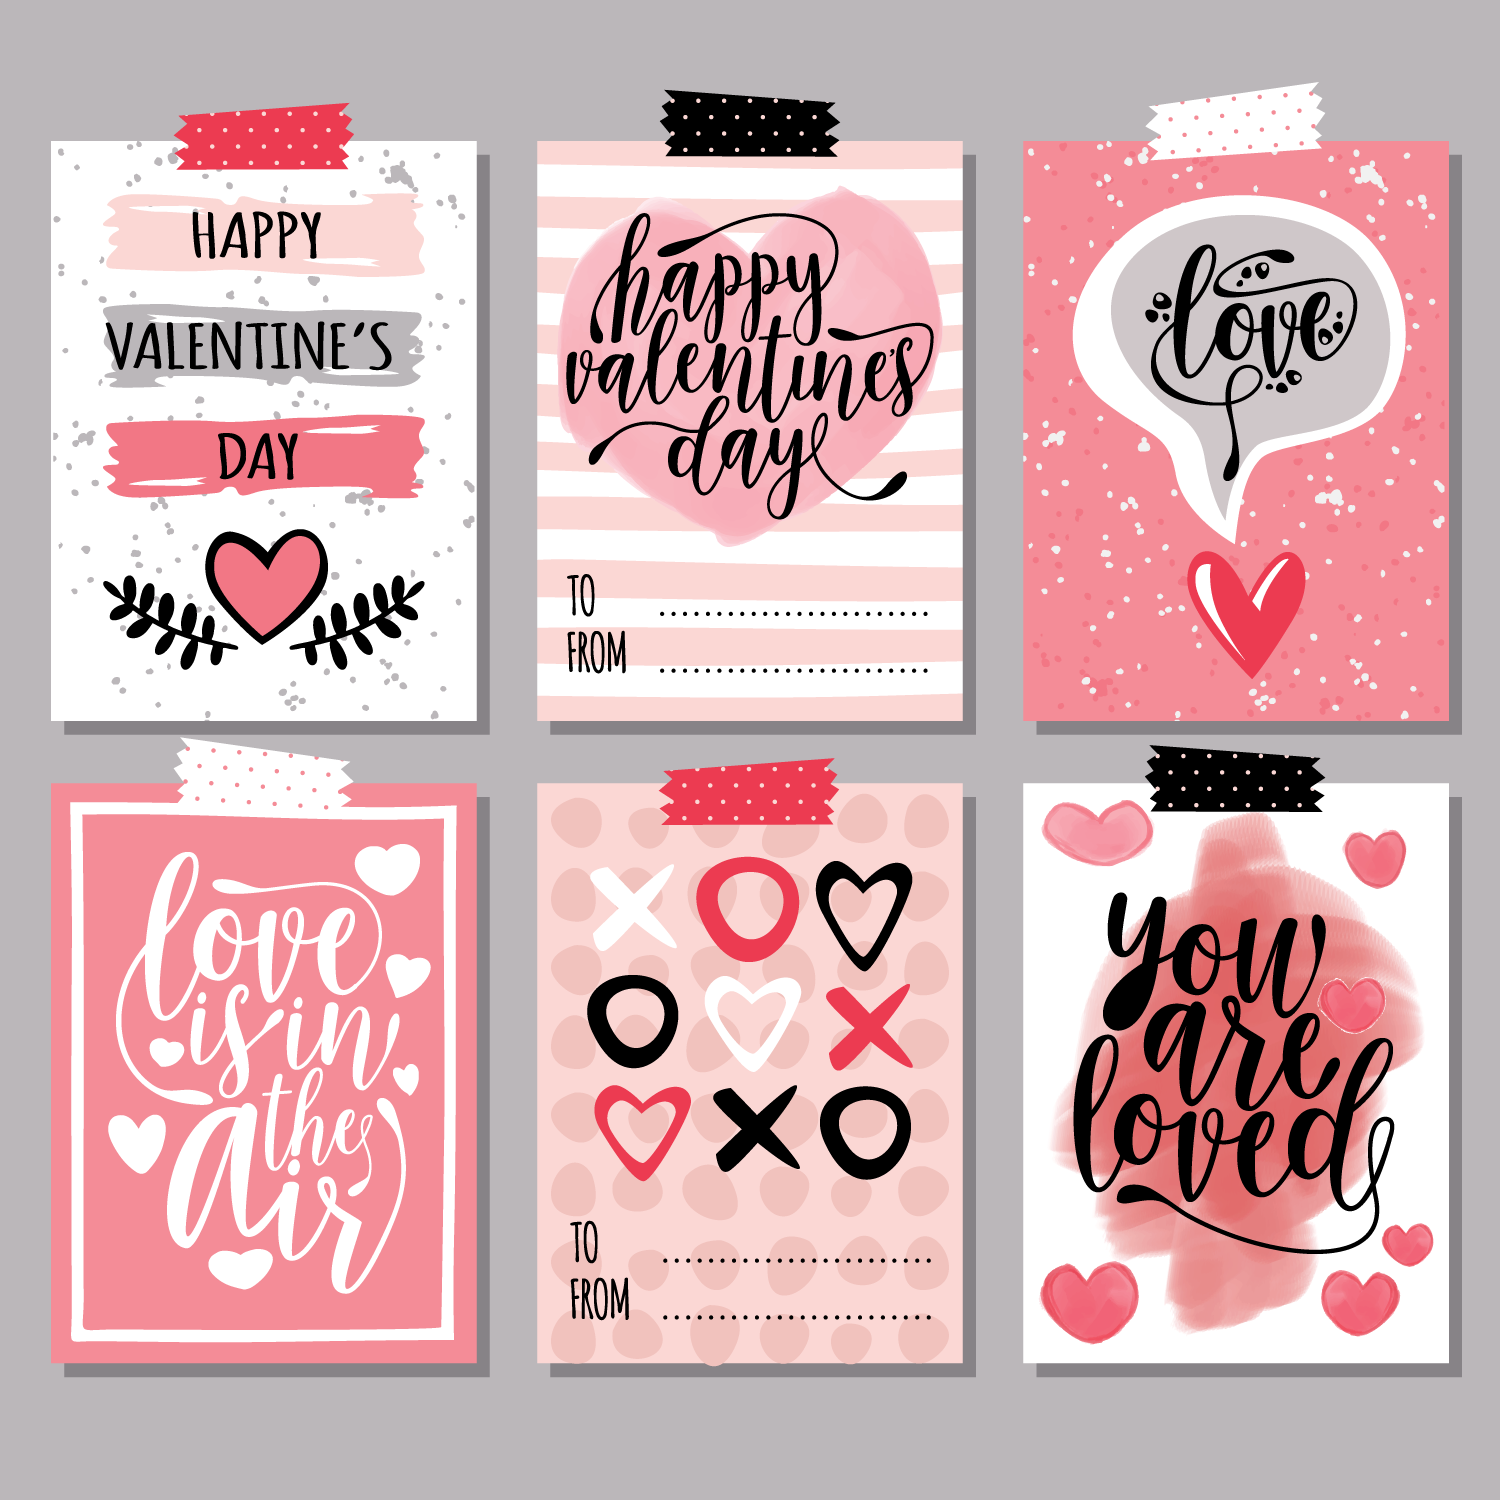 Download Valentine Cards 175396 - Download Free Vectors, Clipart ...